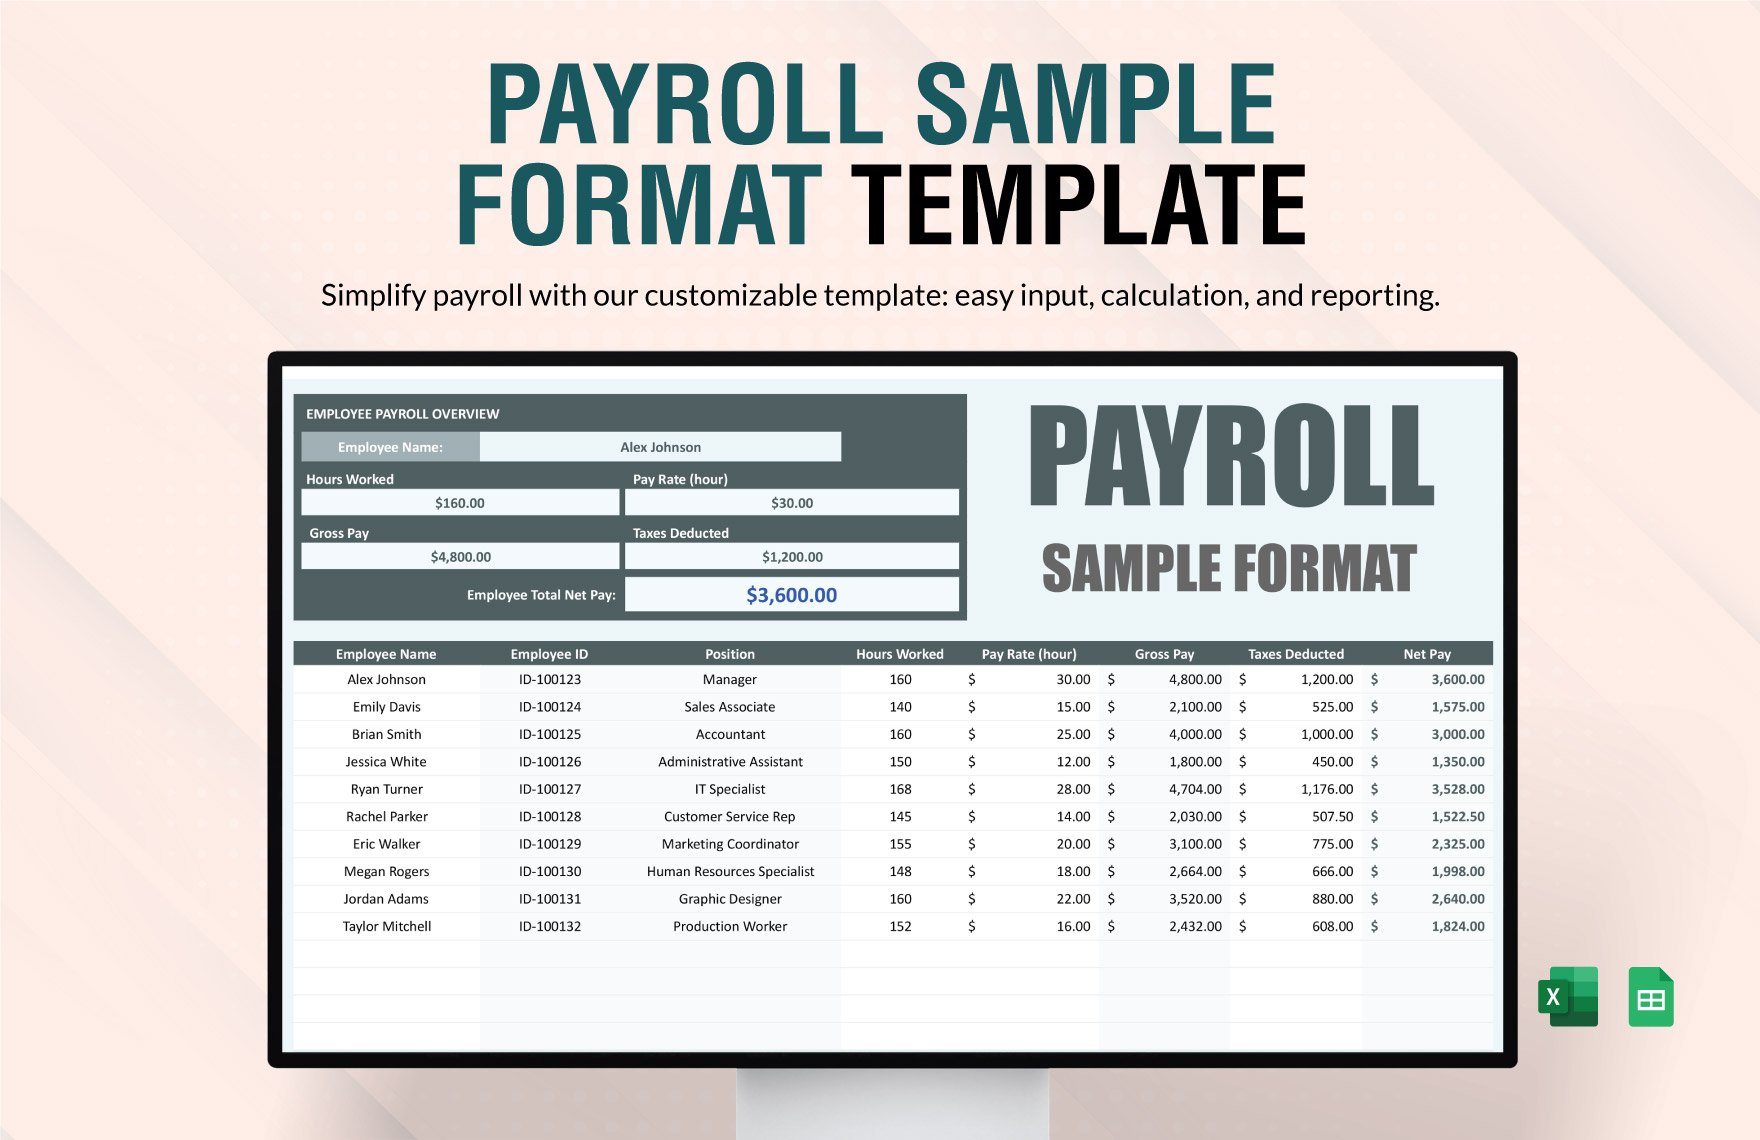 Free Payroll Sample Format Template